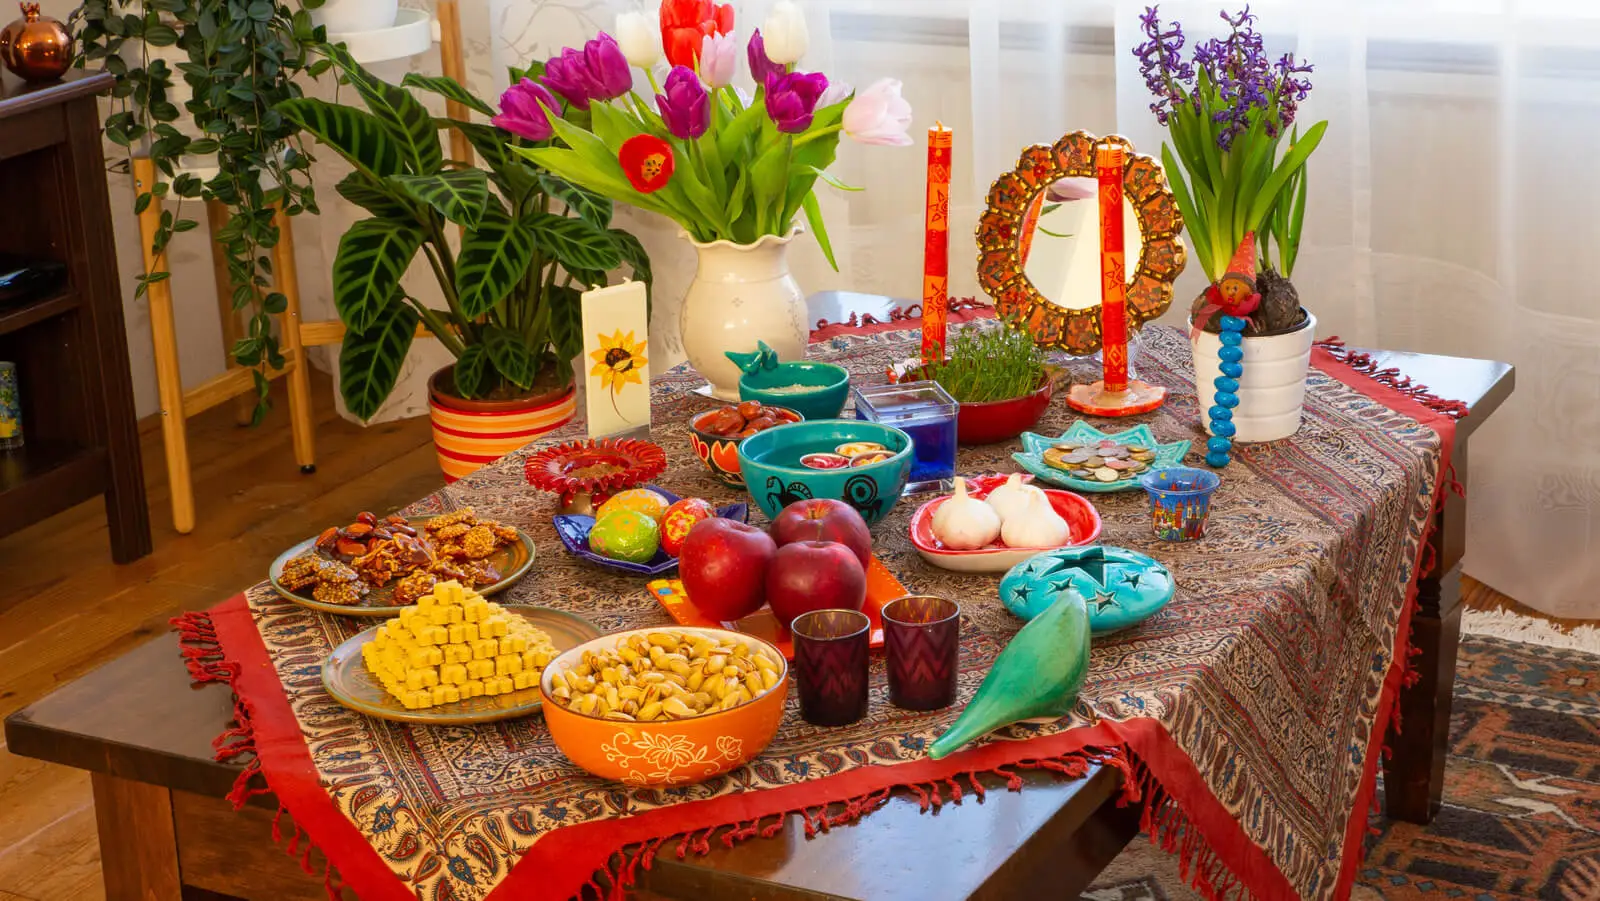 Haftsin Table in Persian Newy Year